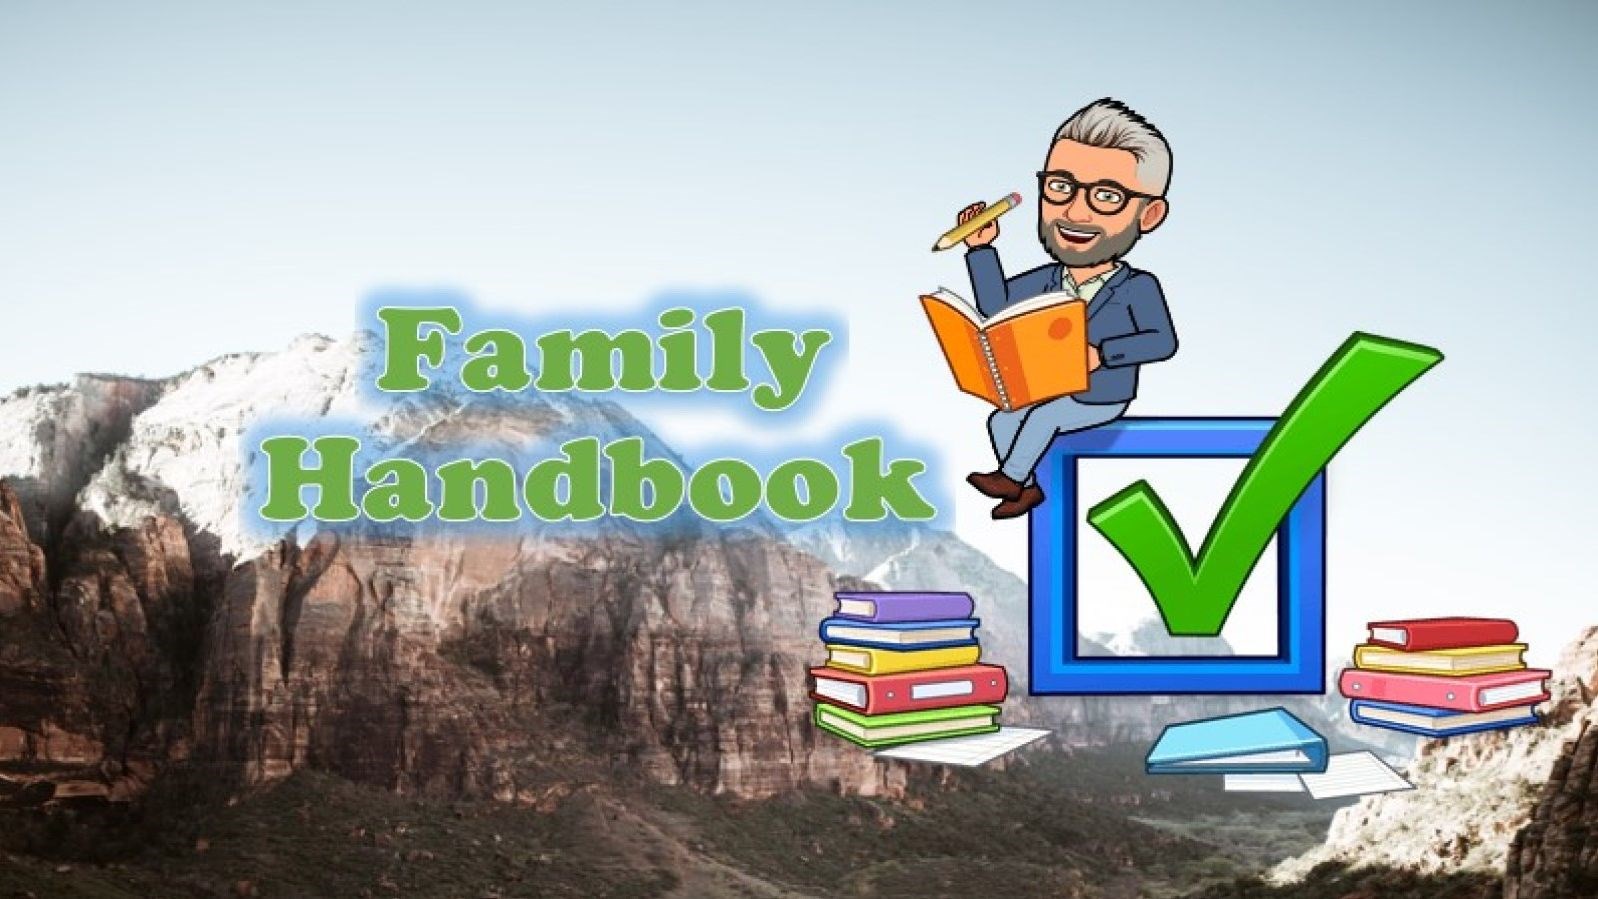 Family Handbook Image of Principal Nelson Bitmoji